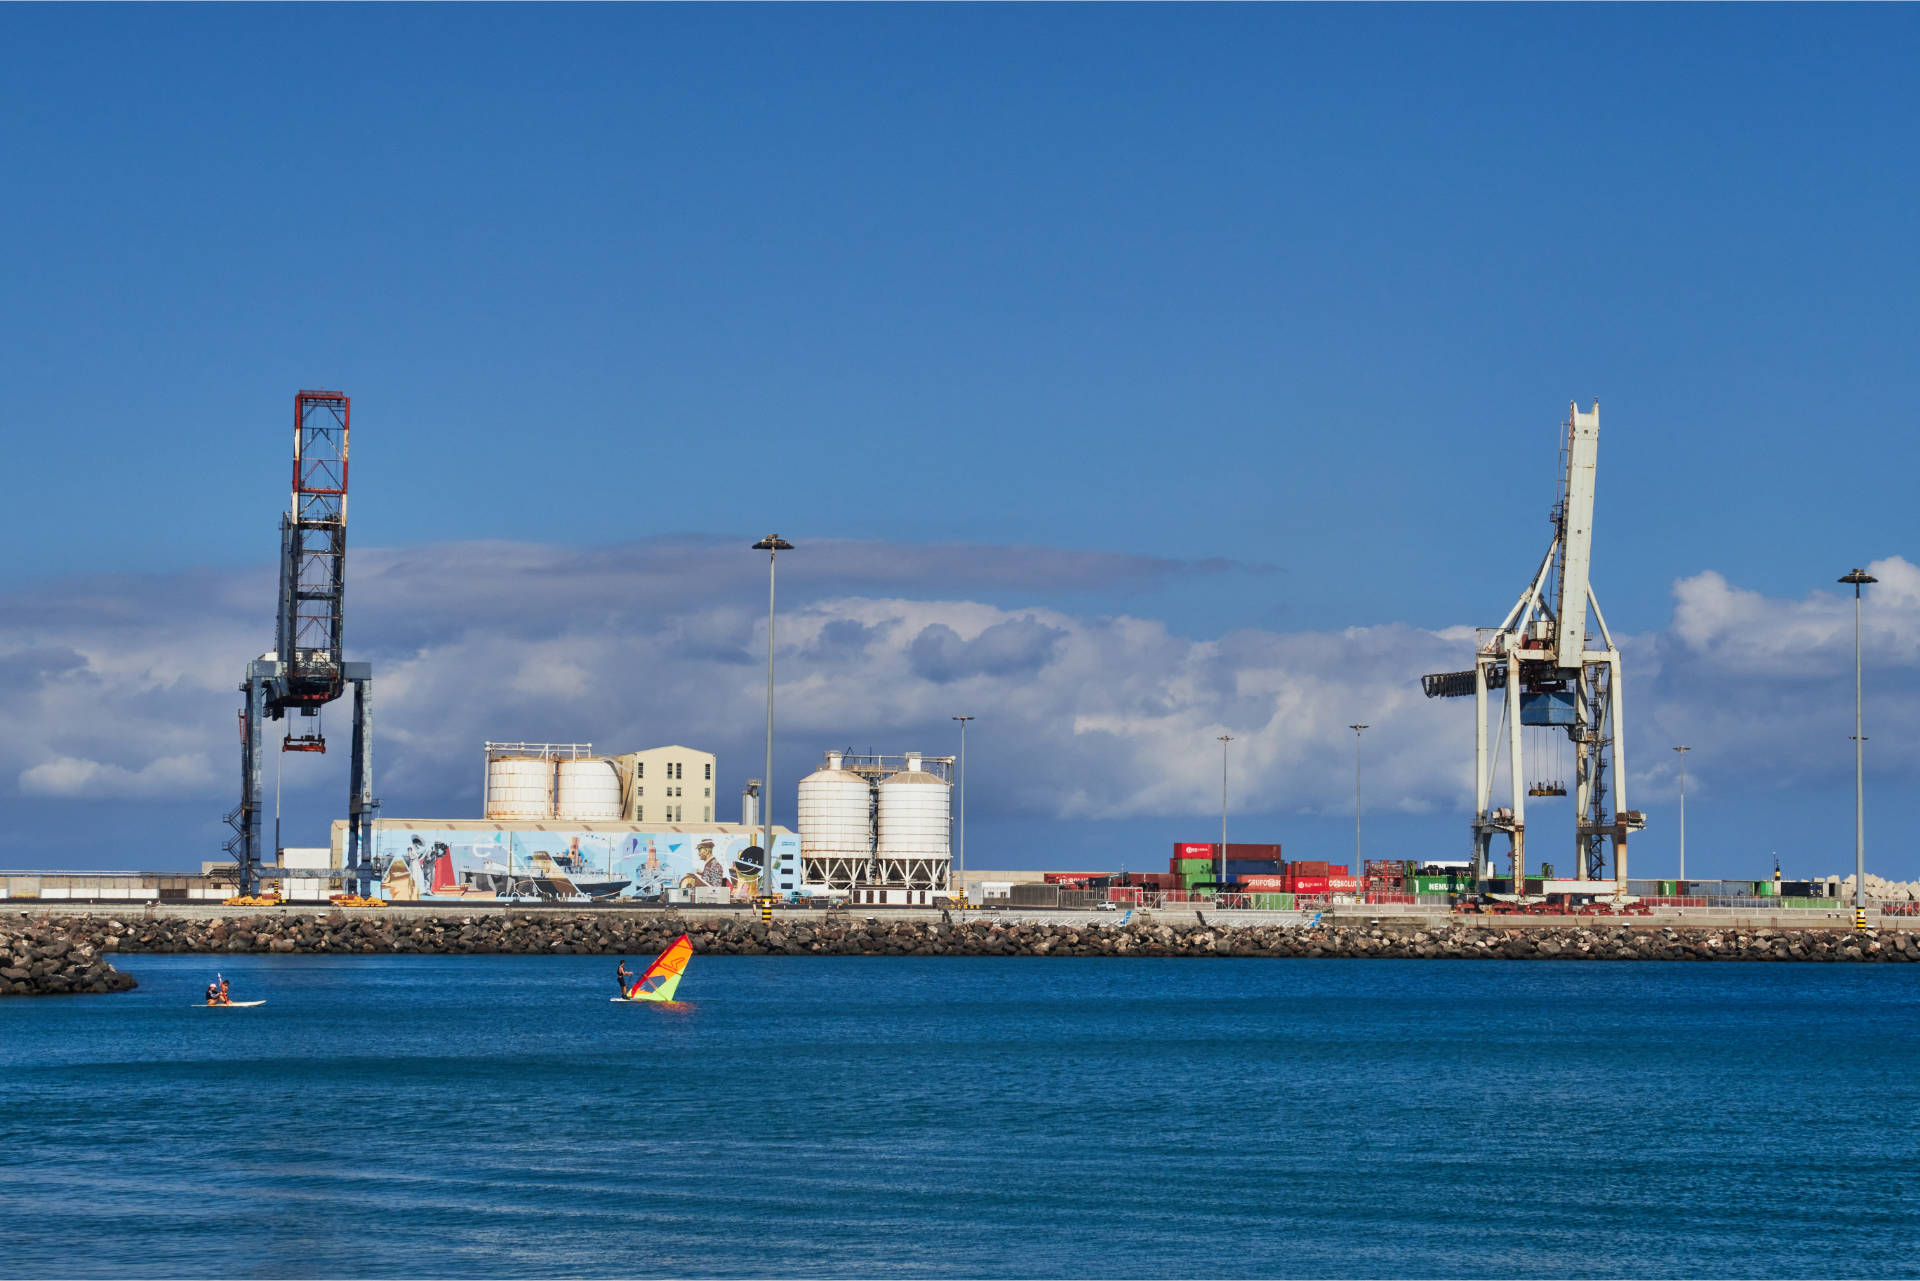 Der Hafen von Puerto del Rosario Fuerteventura.